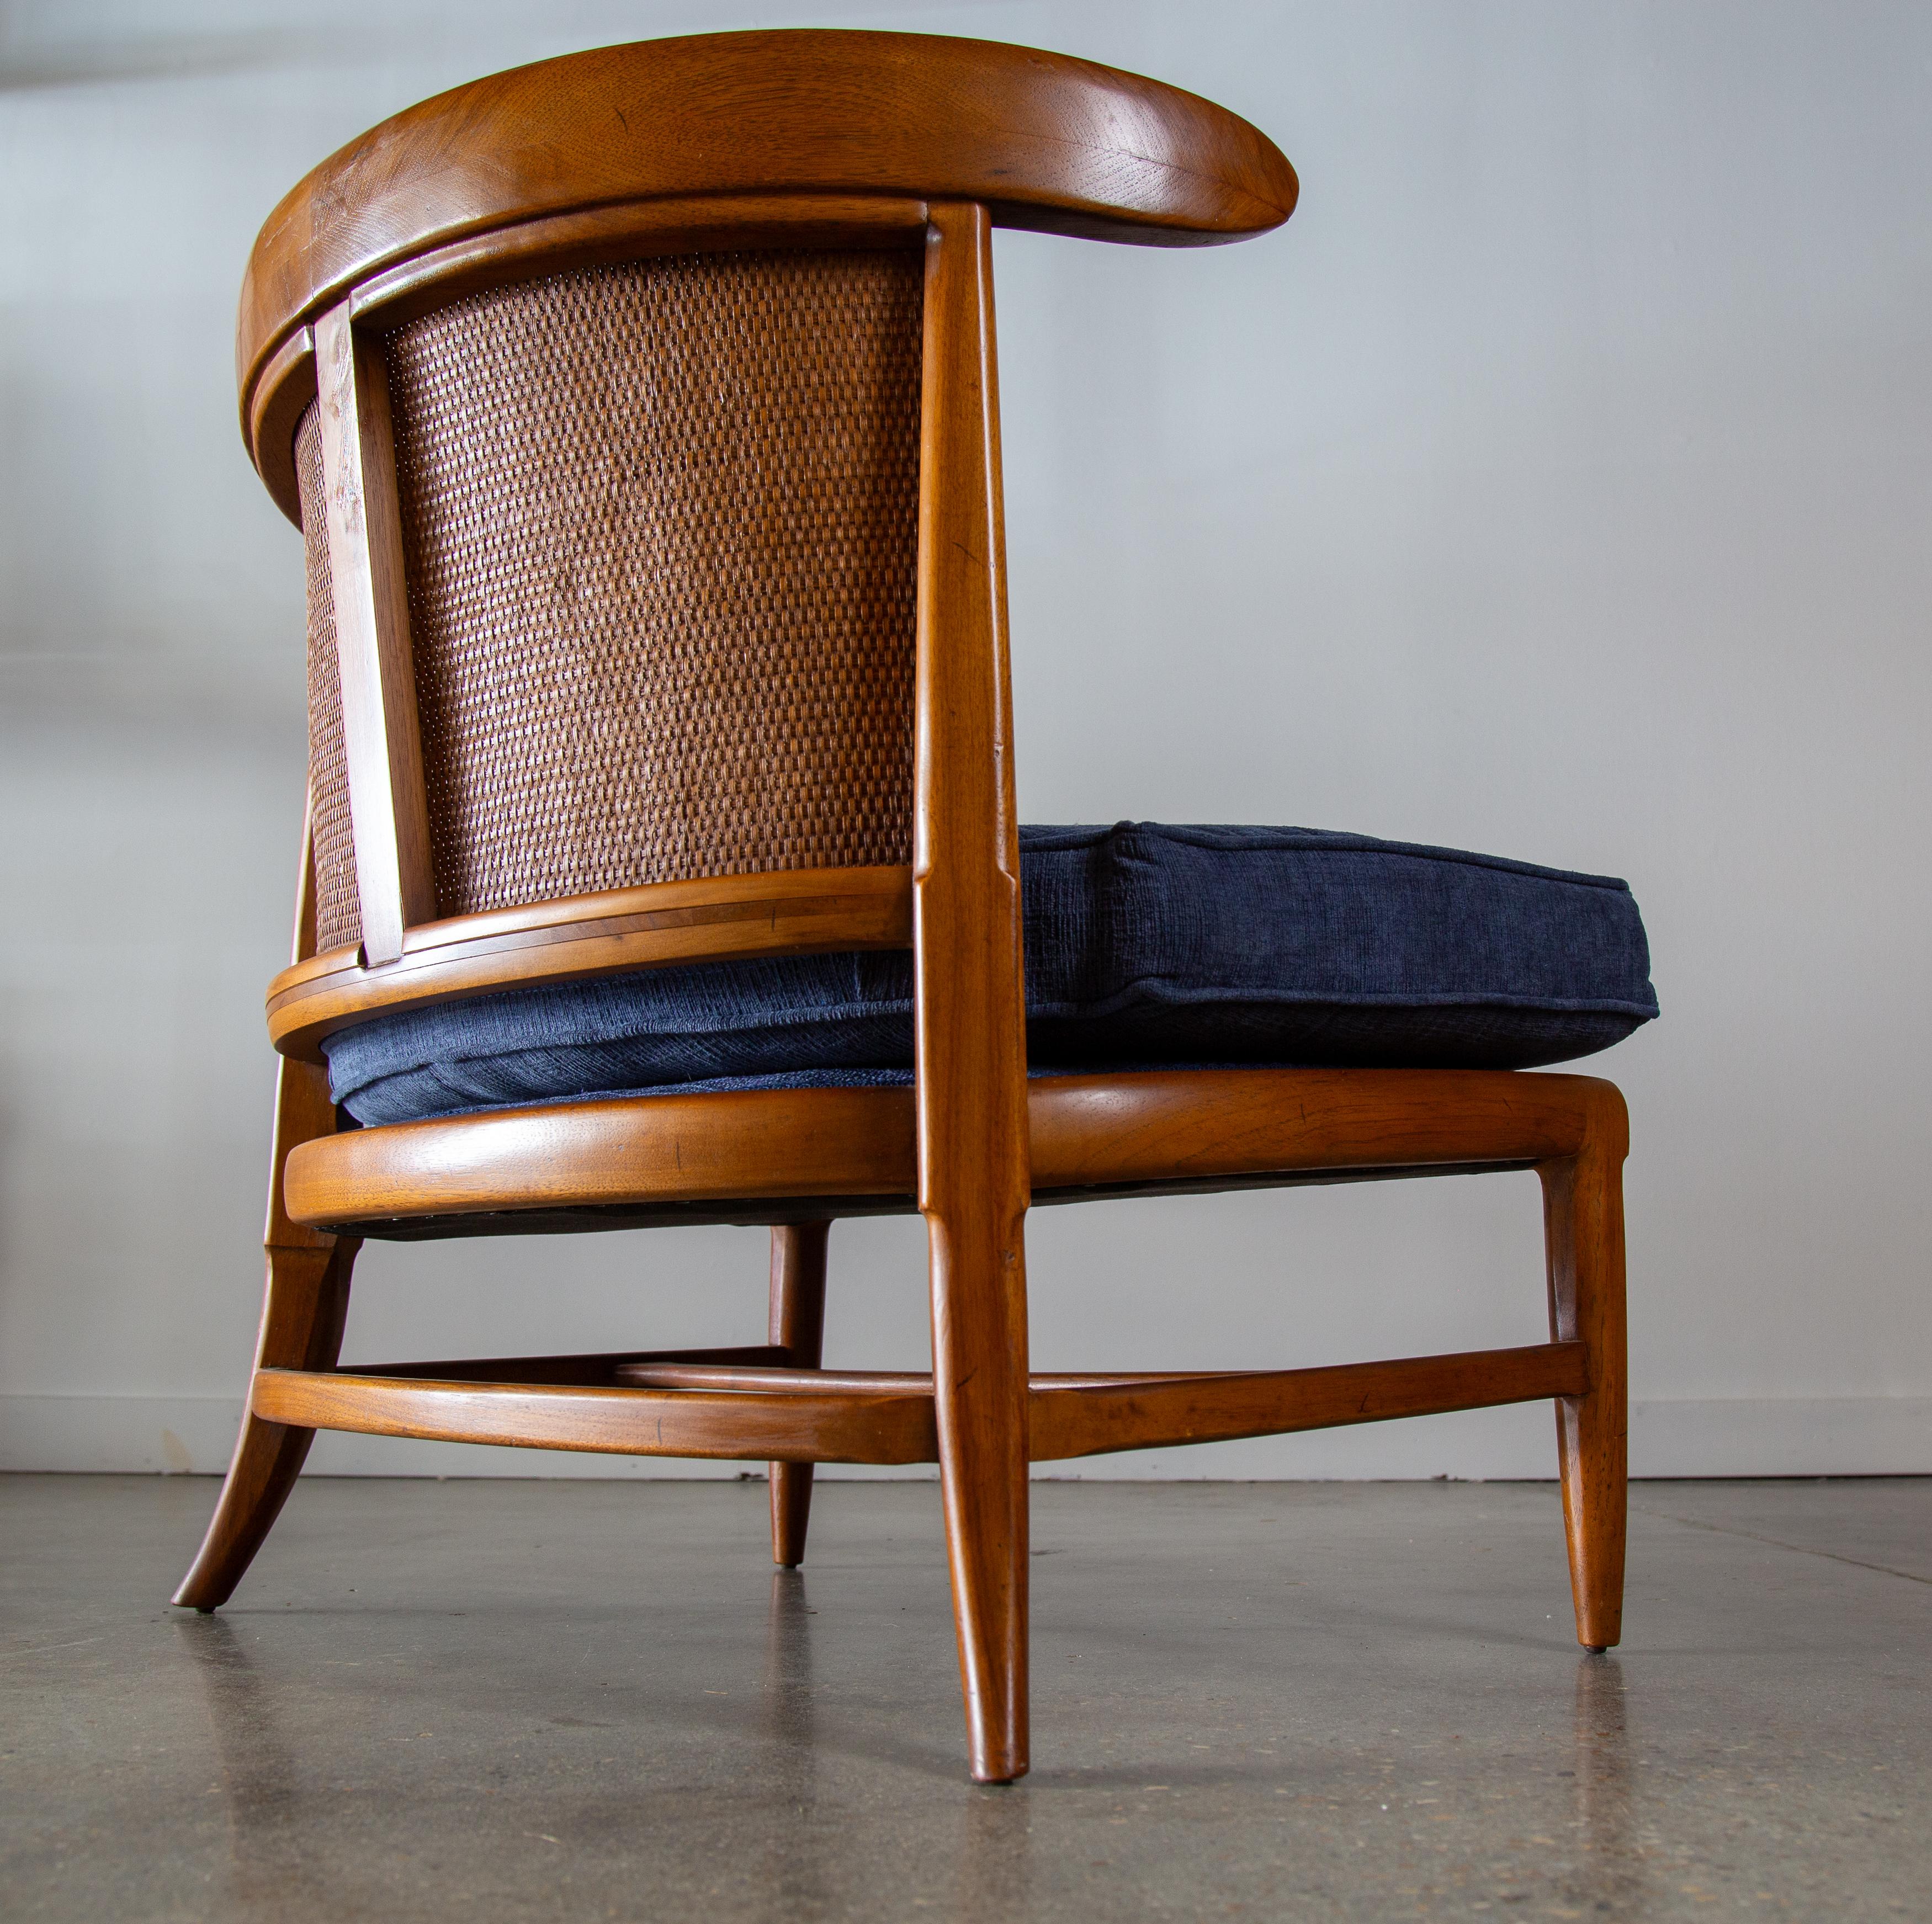 1950s Tomlinson Sophisticate Slipper Chairs Chestnut Cane Mid Century Modern 1